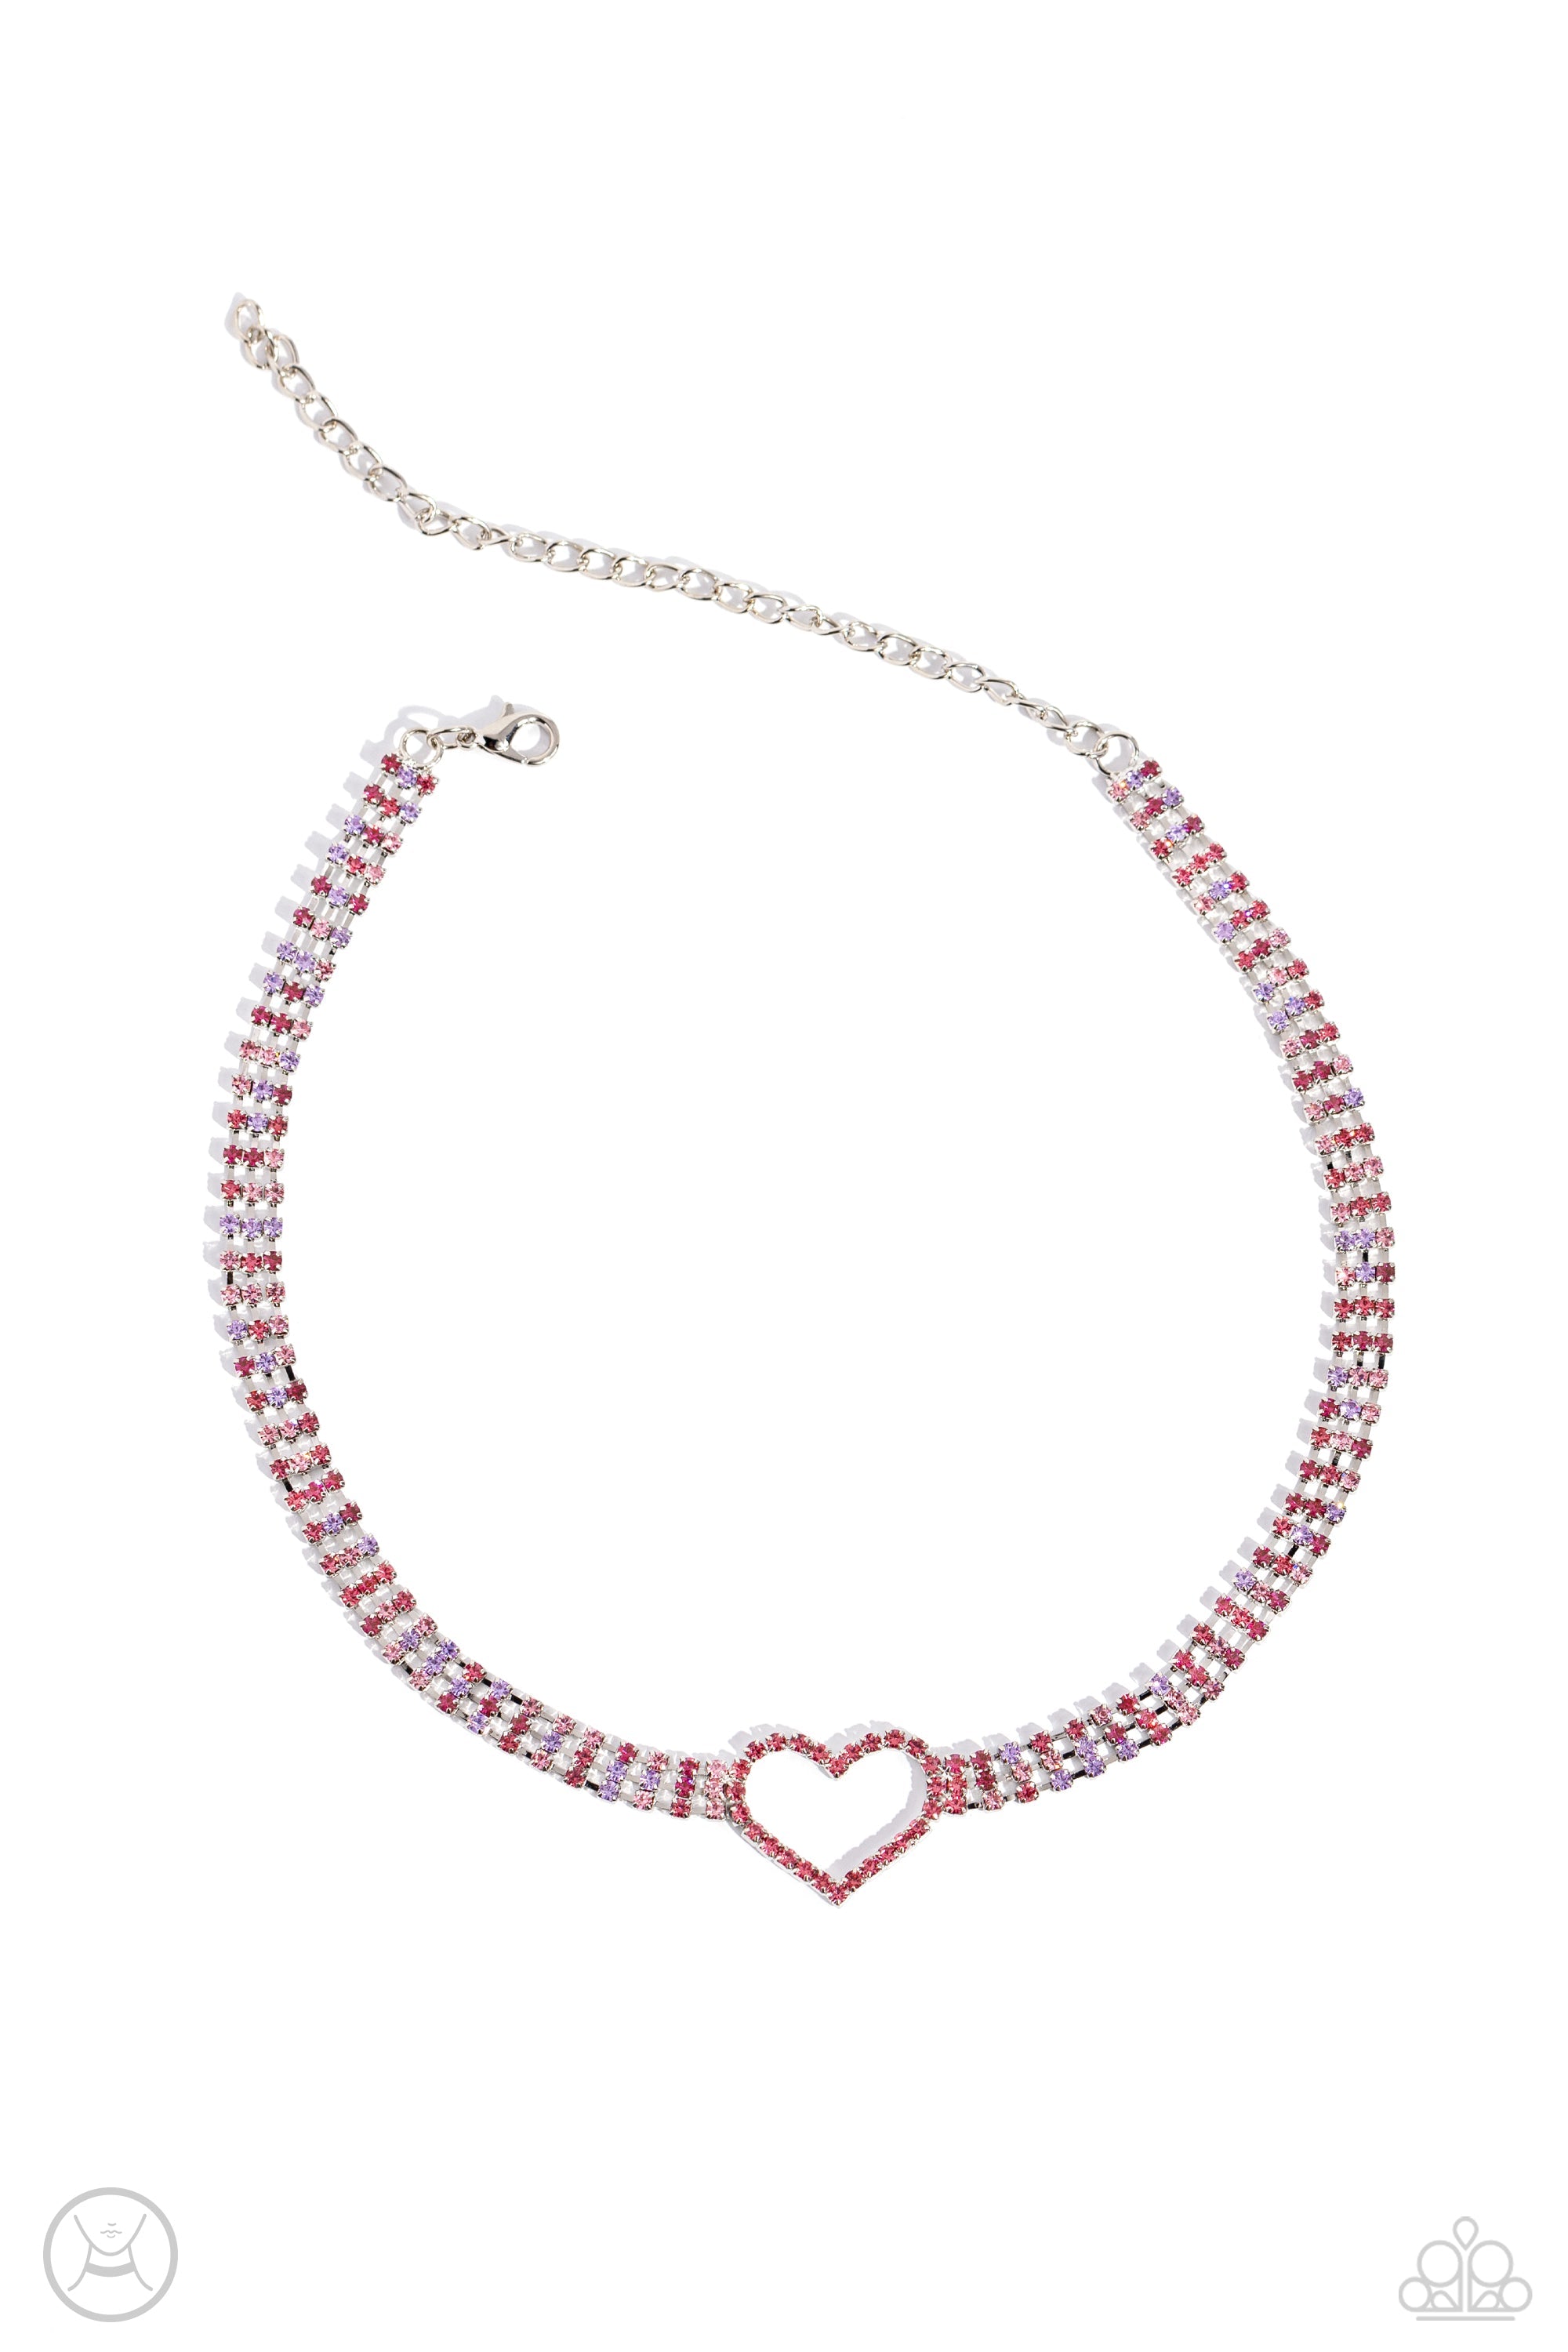 Rows of Romance Pink Rhinestone Heart Choker Necklace - Paparazzi Accessories- lightbox - CarasShop.com - $5 Jewelry by Cara Jewels